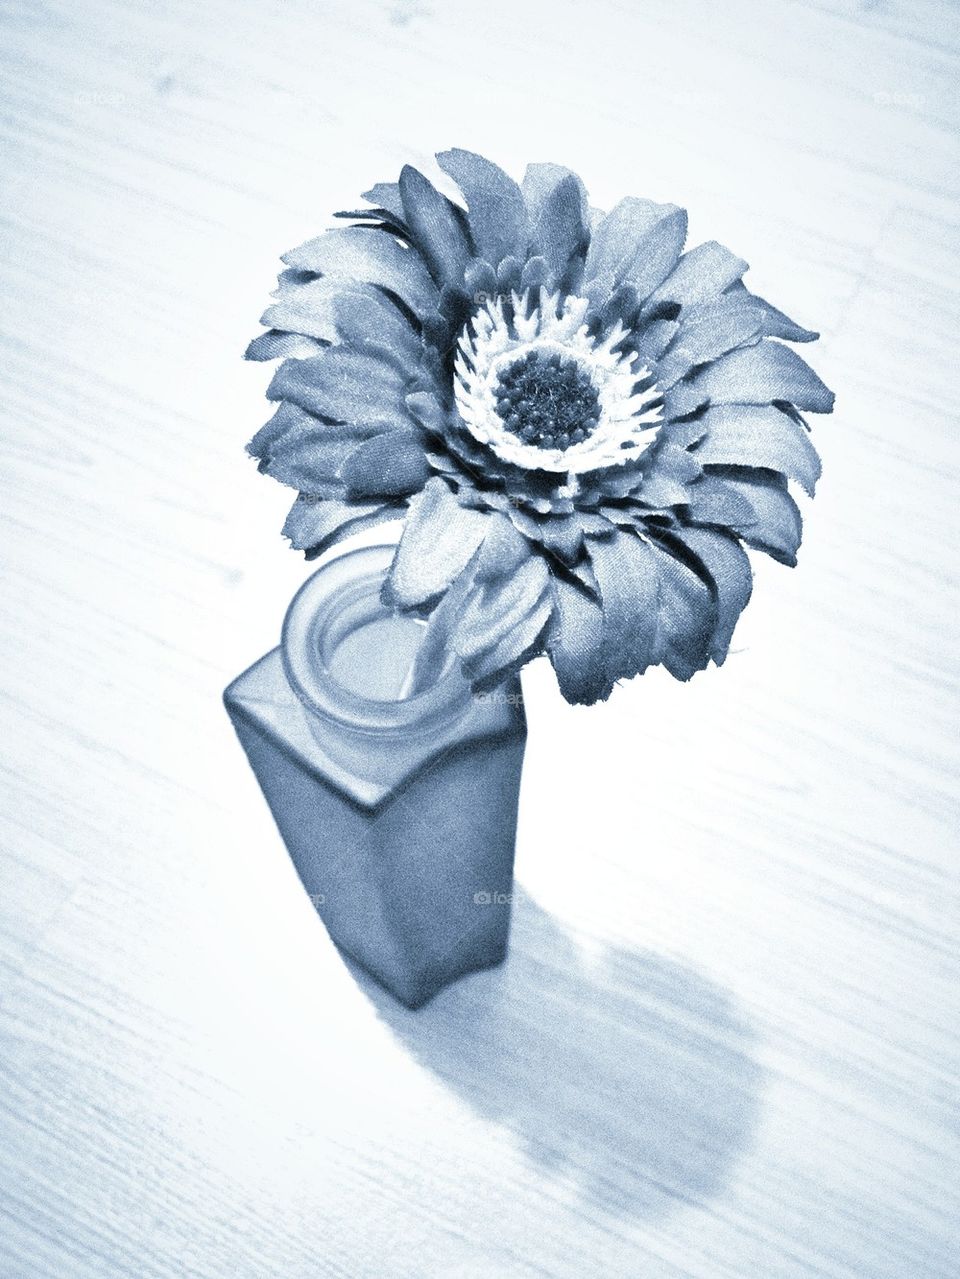 An artificial flower in a bottle